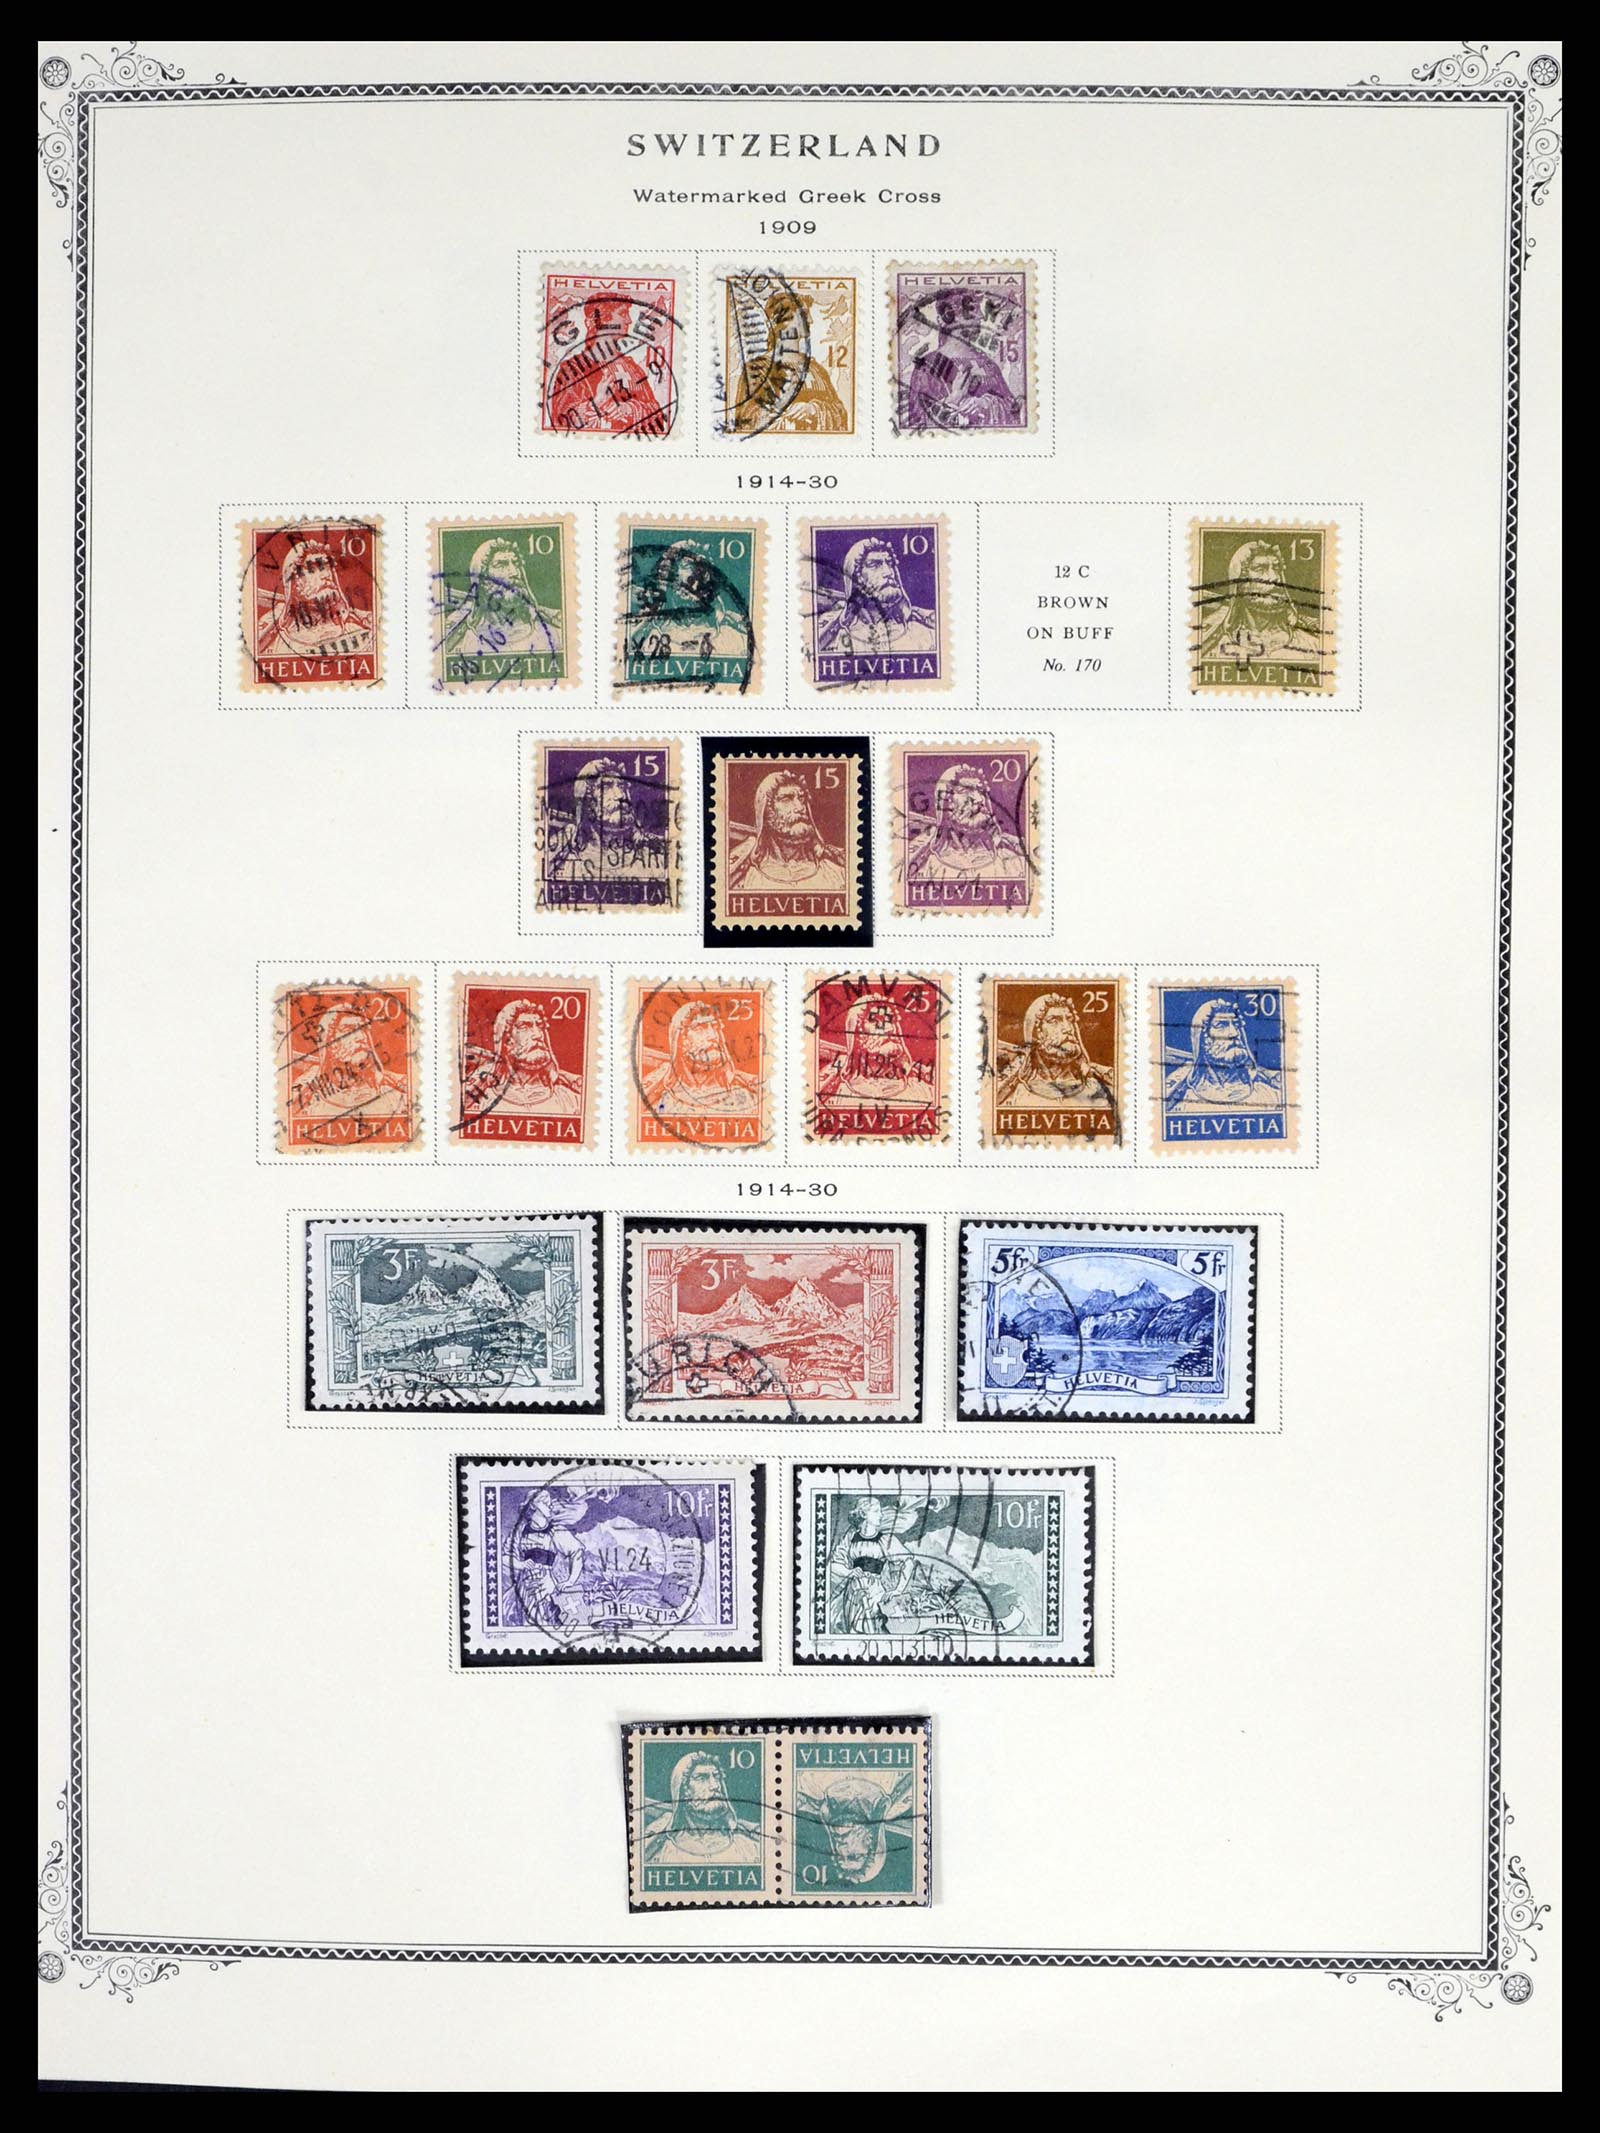 37641 007 - Stamp collection 37641 Switzerland 1855-1984.